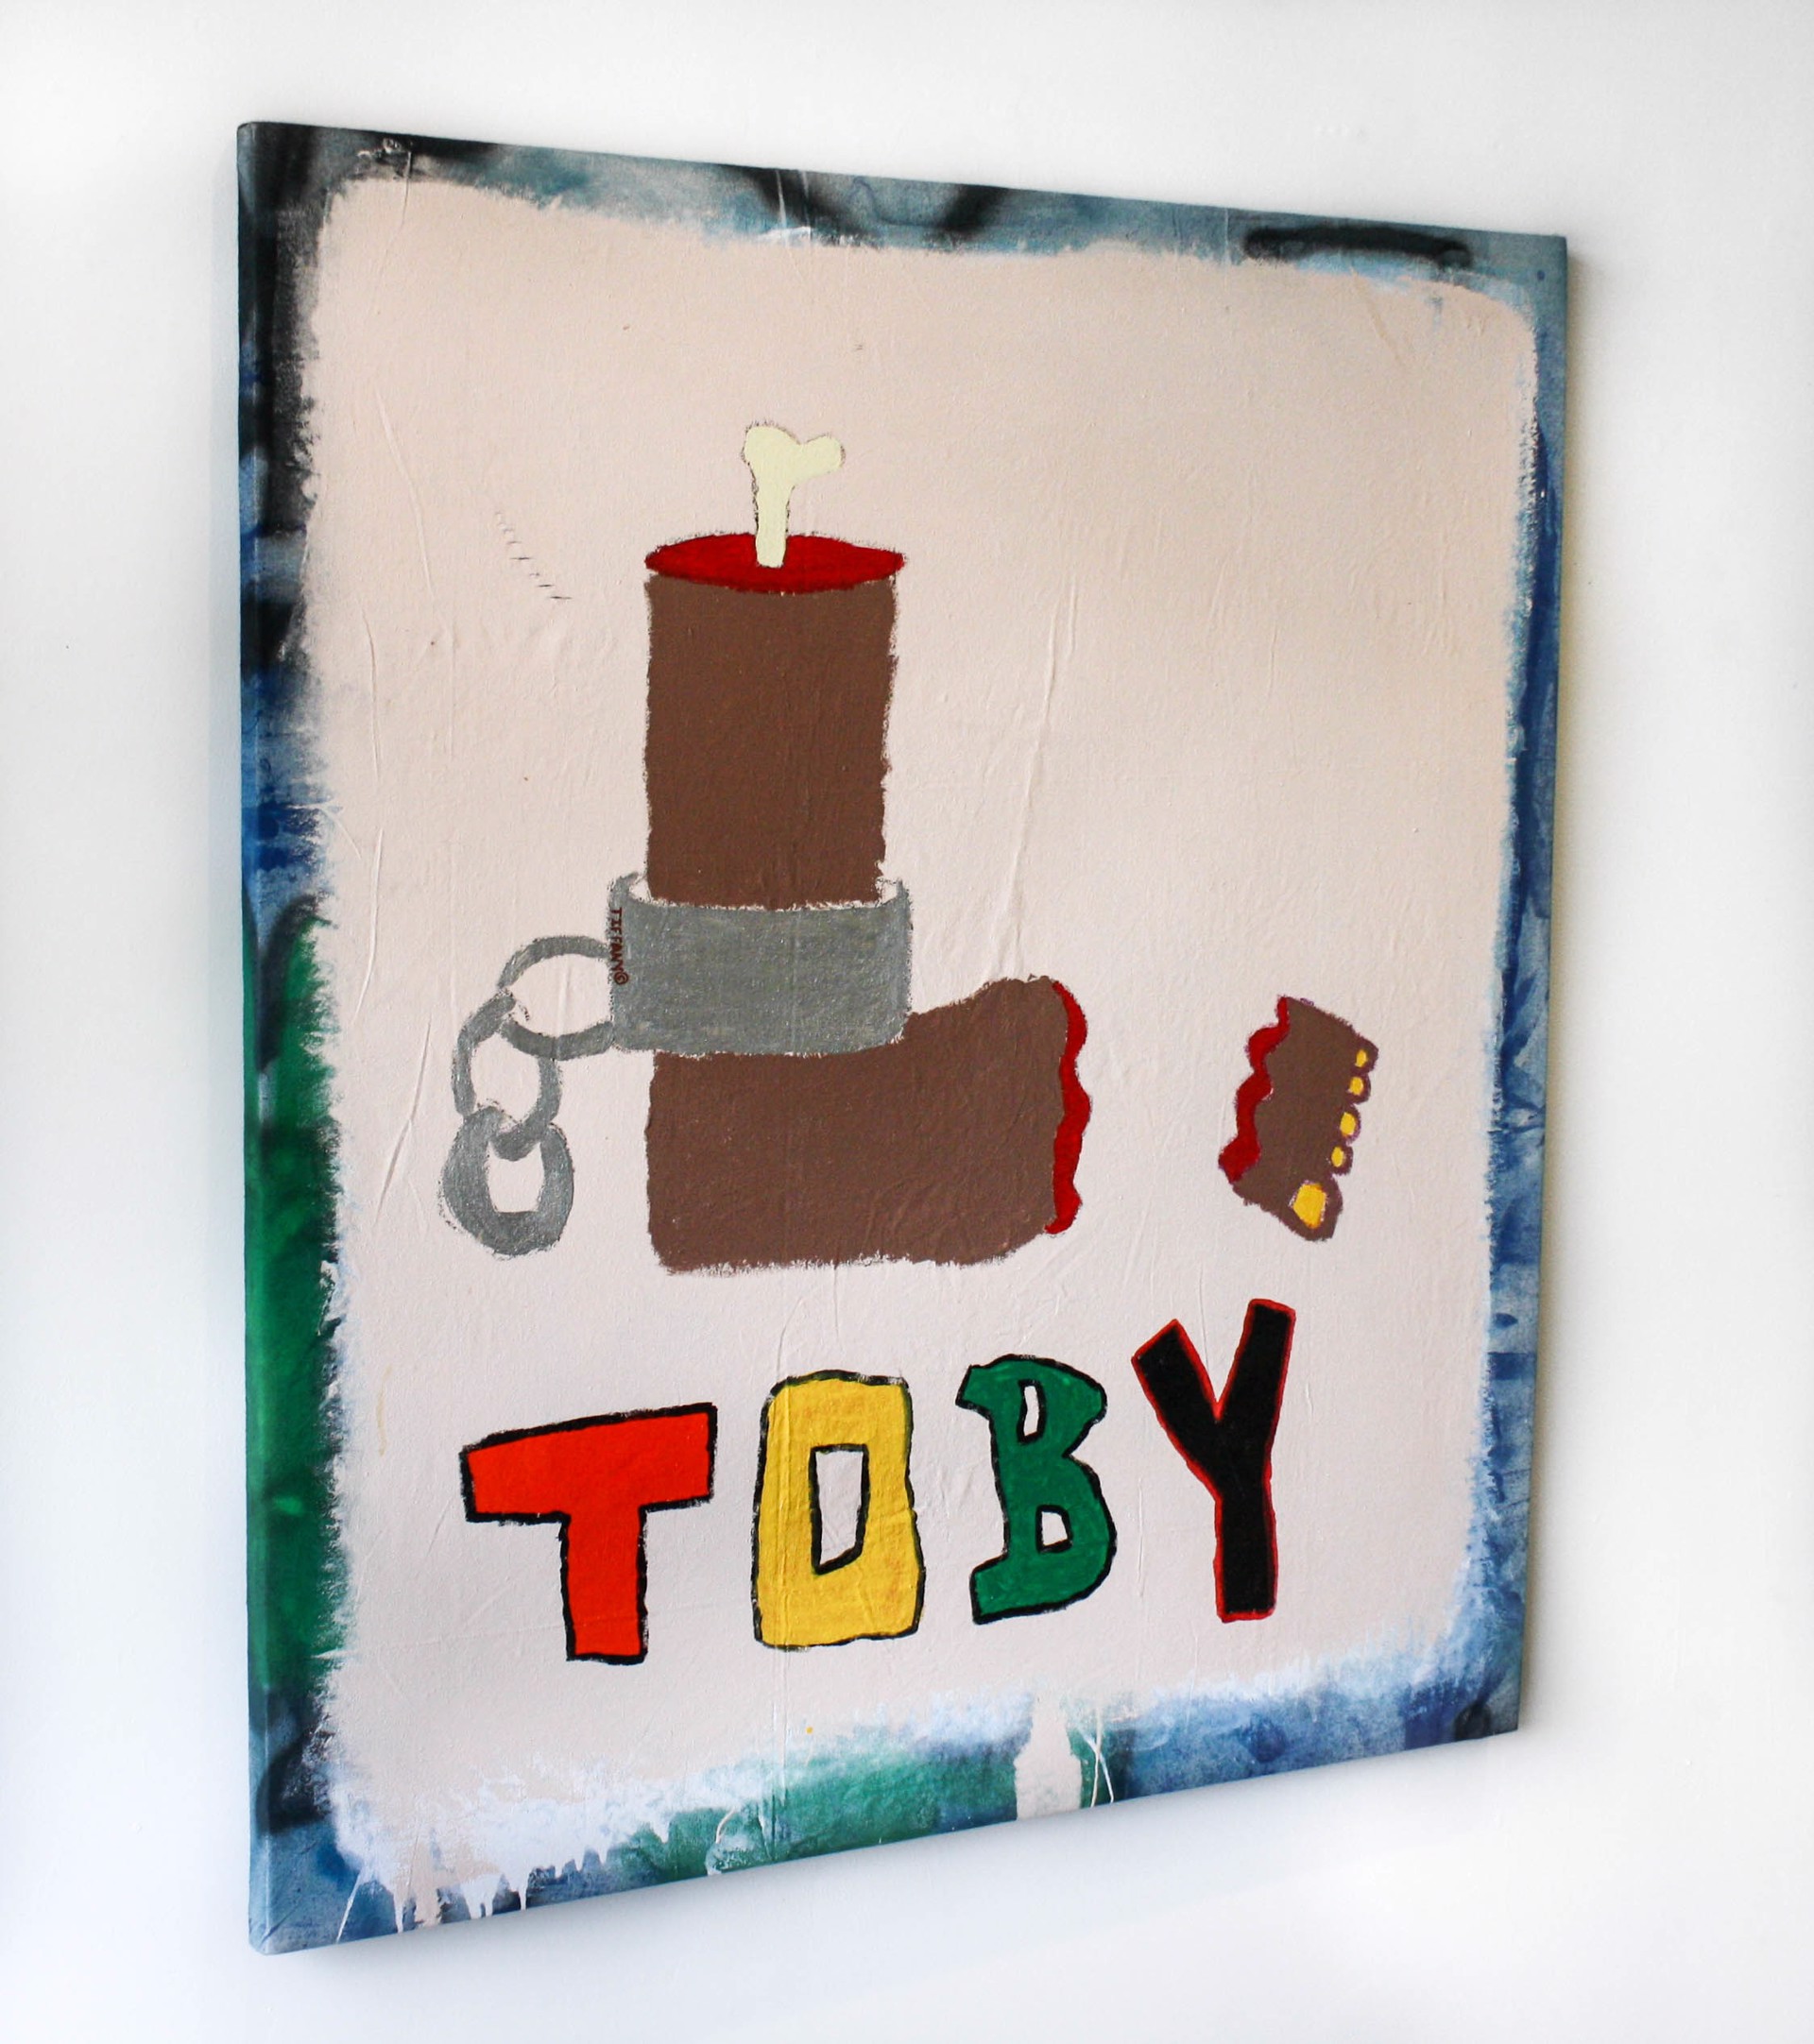 TOBY (featuring Tiffany Blue) by Marlos E'van